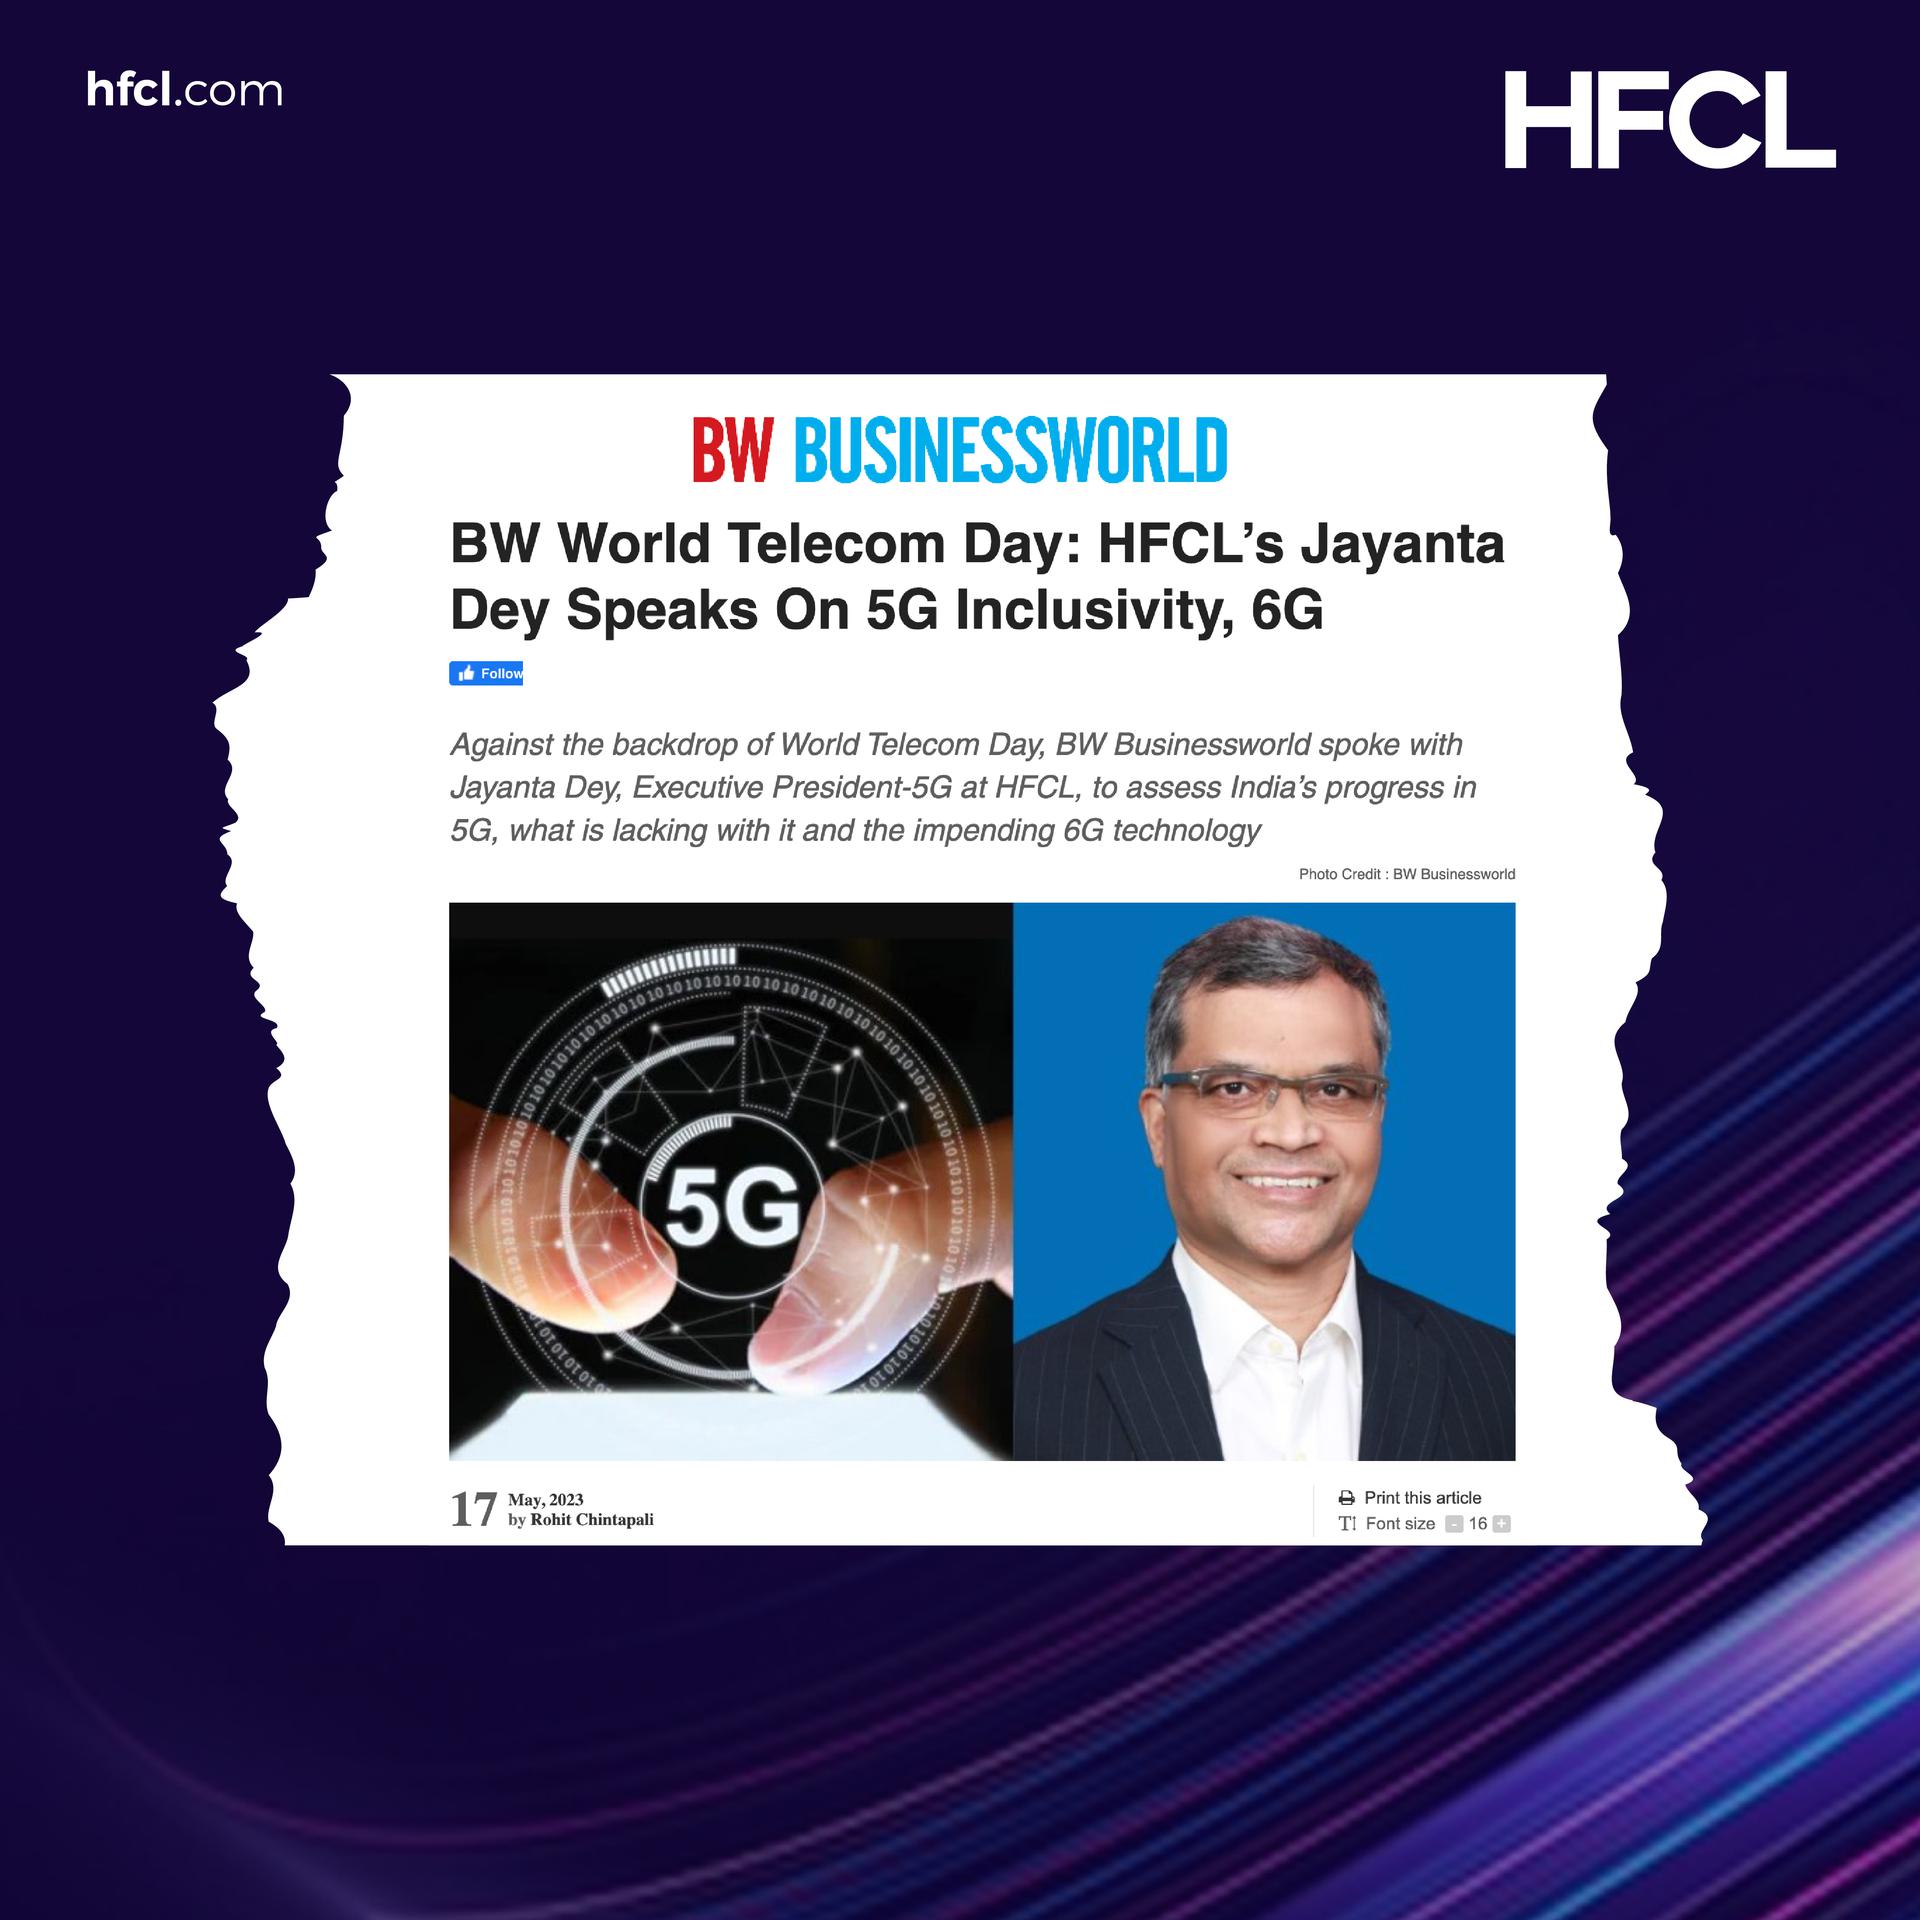 HFCL's Jayanta Dey Speaks on 5G Inclusivity & 6G with Business World on World Telecom Day!